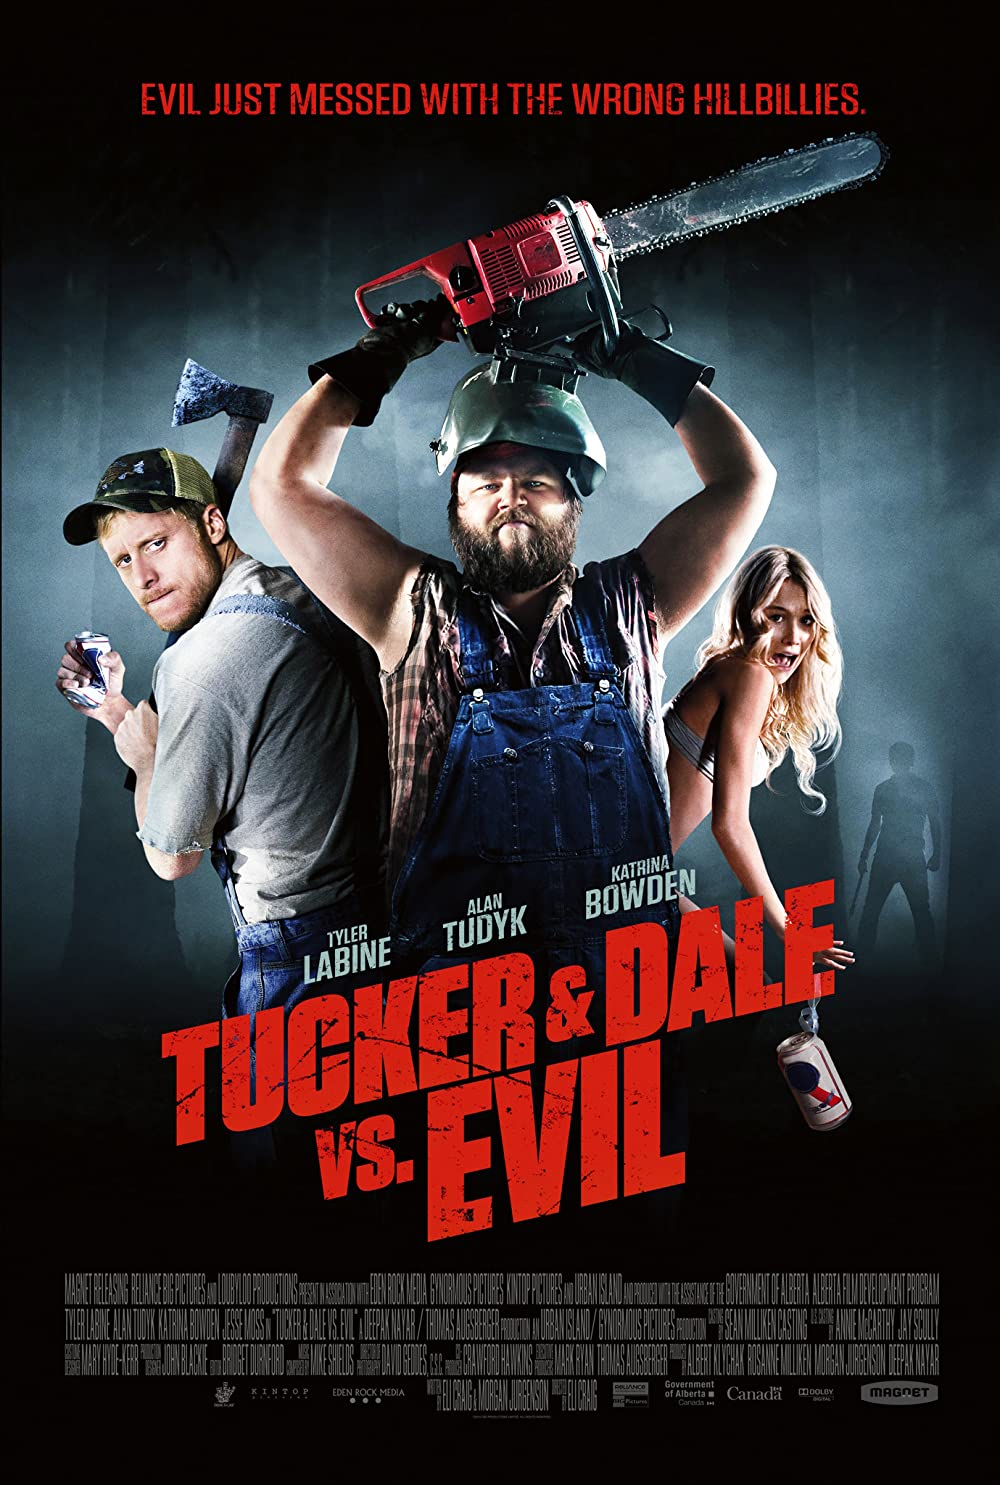 Filmbeschreibung zu Tucker & Dale vs. Evil